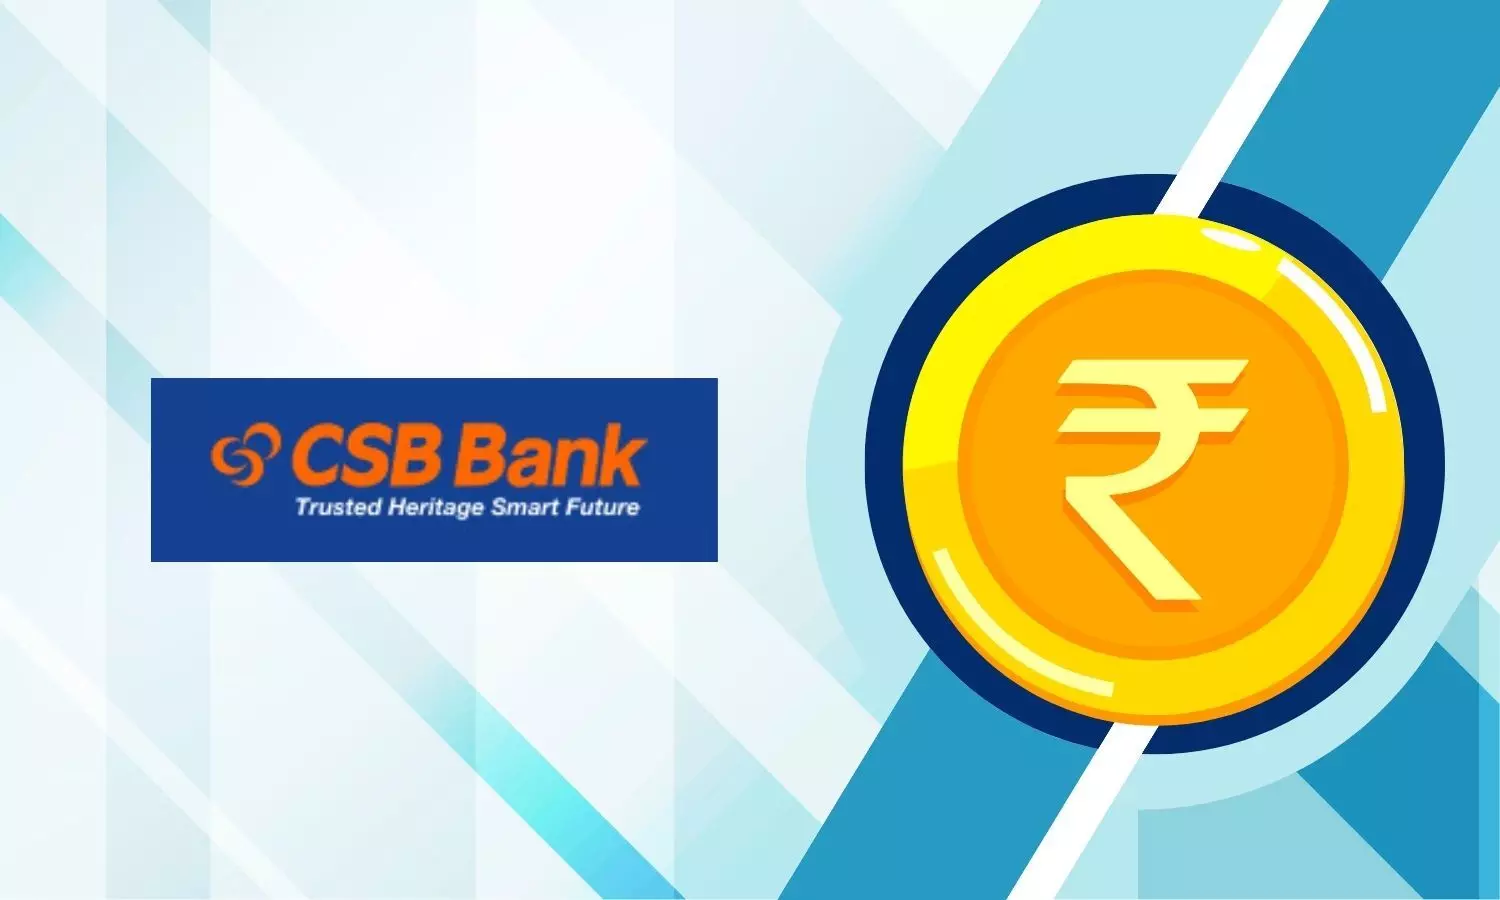 CSB Bank logo